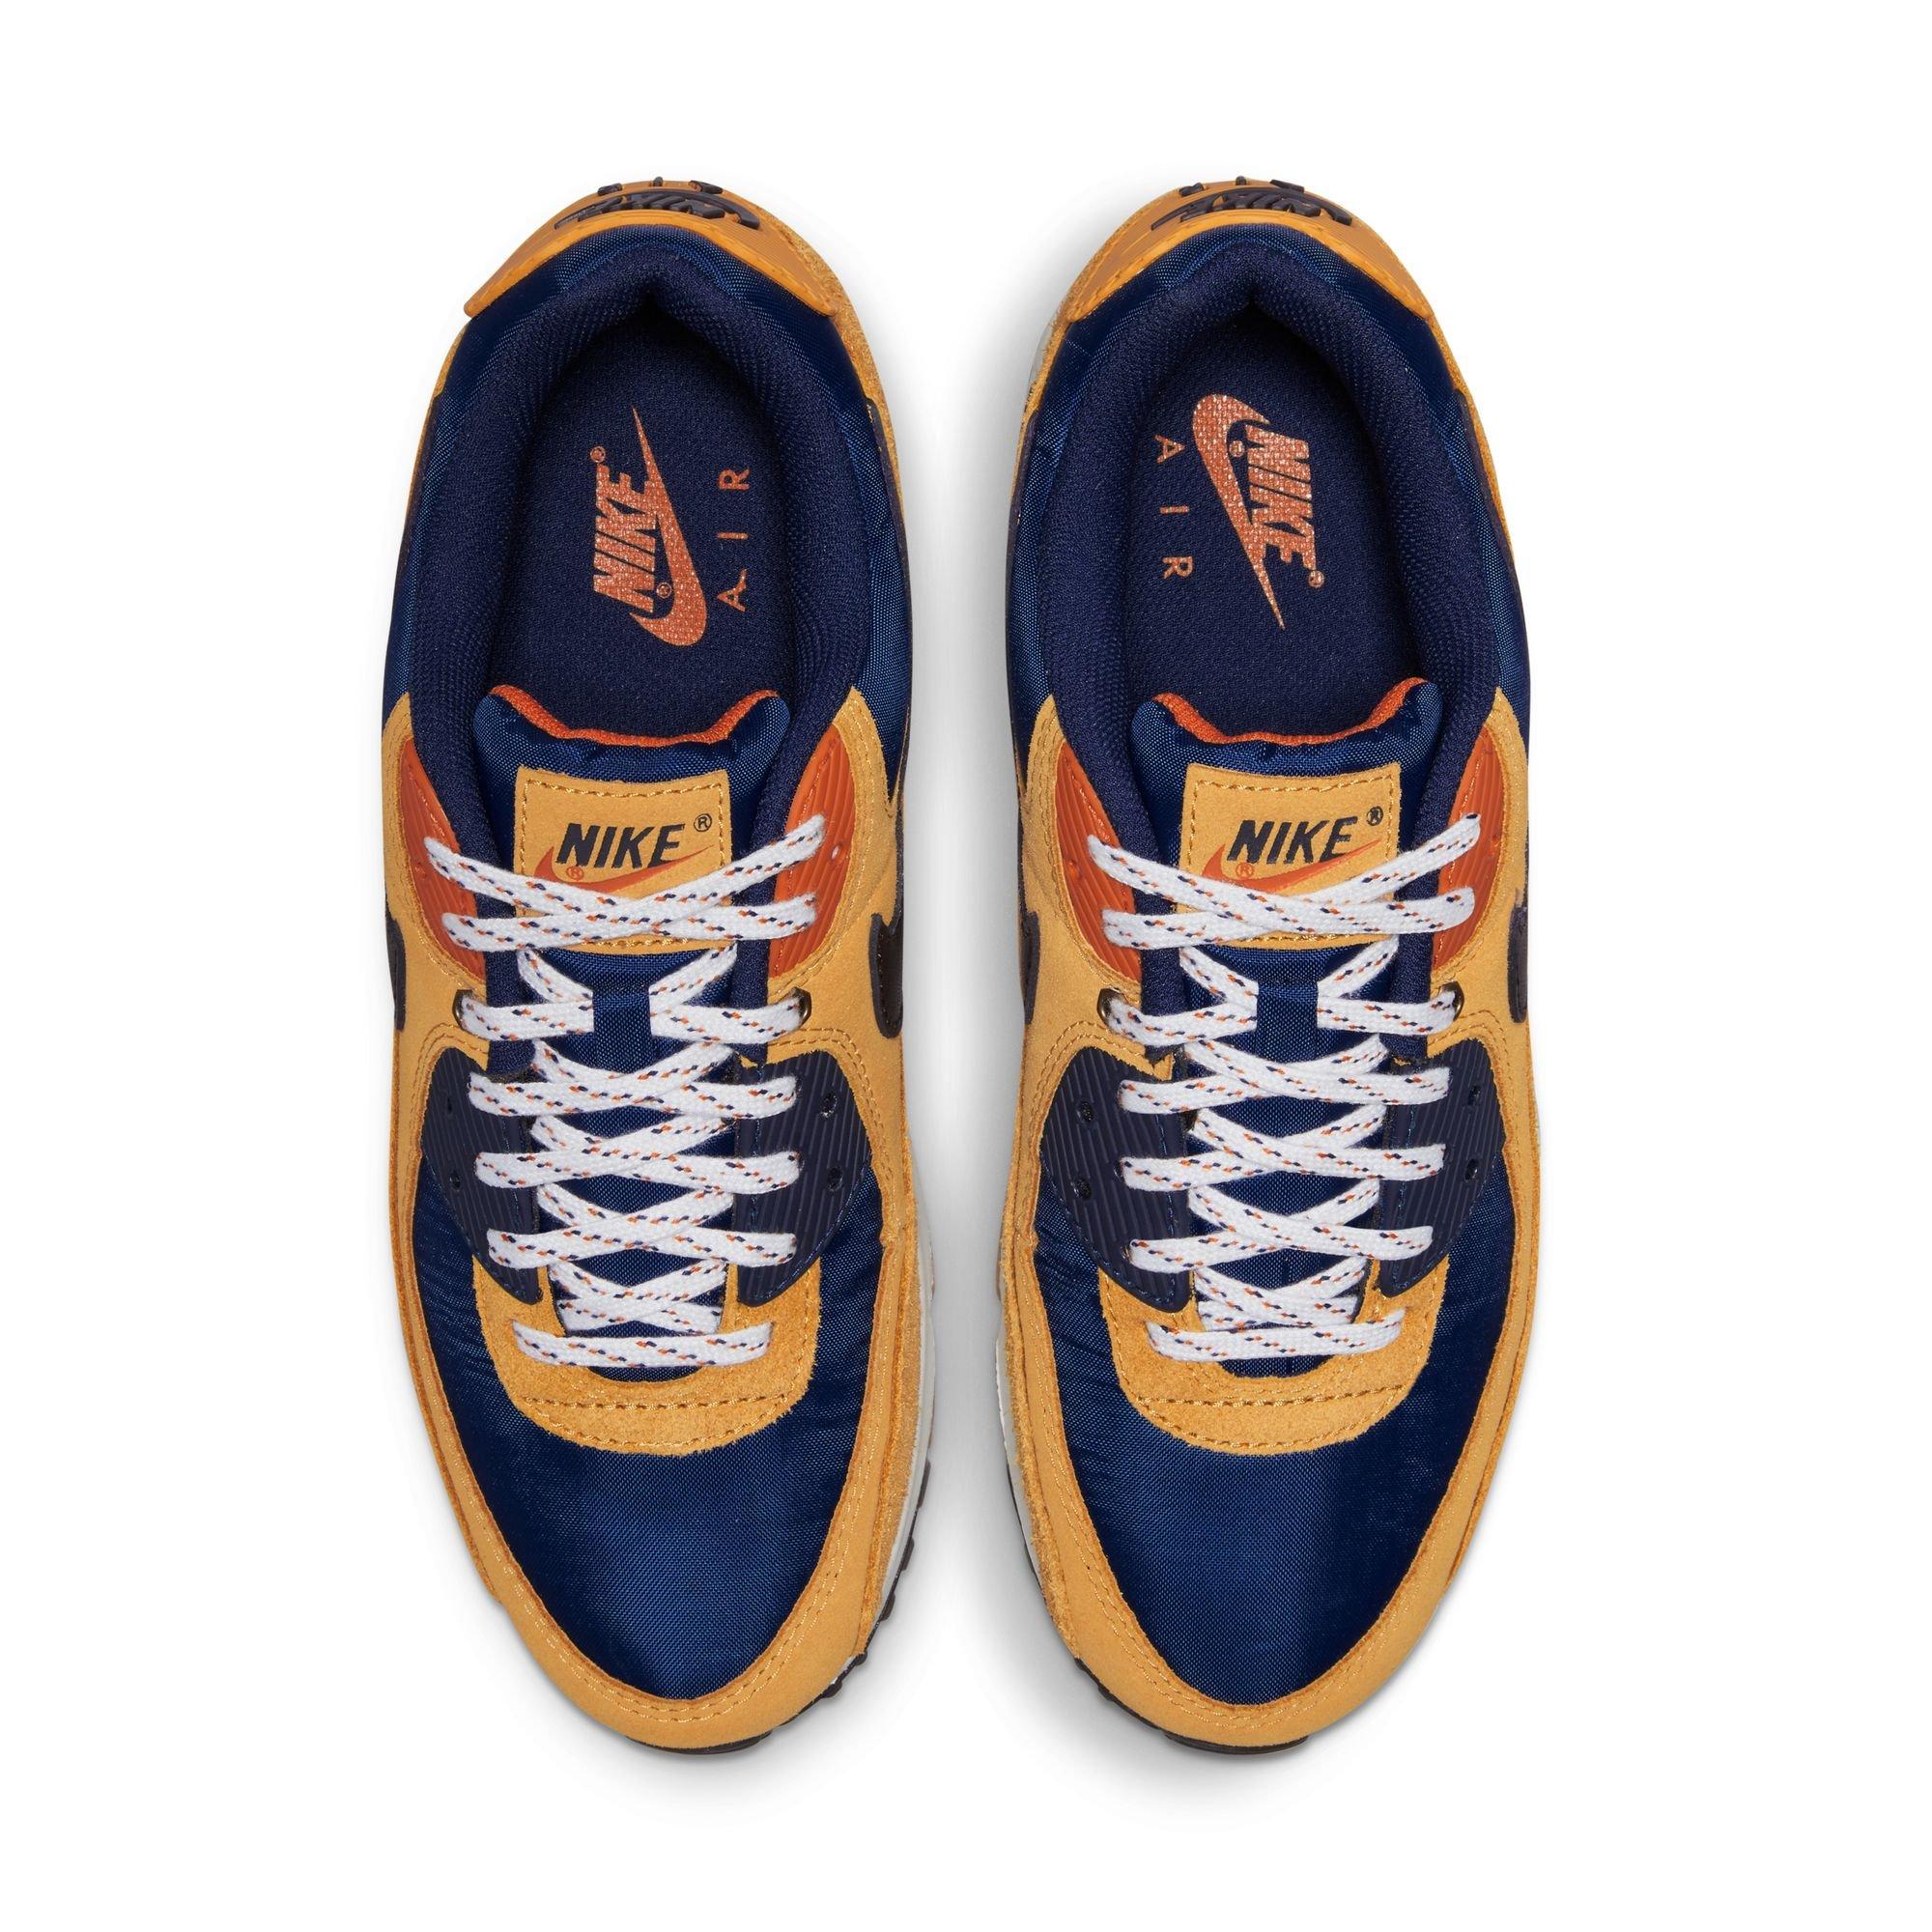 Nike Men's Air Max 90 Shoes, Size 9.5, Tan/Orange/White